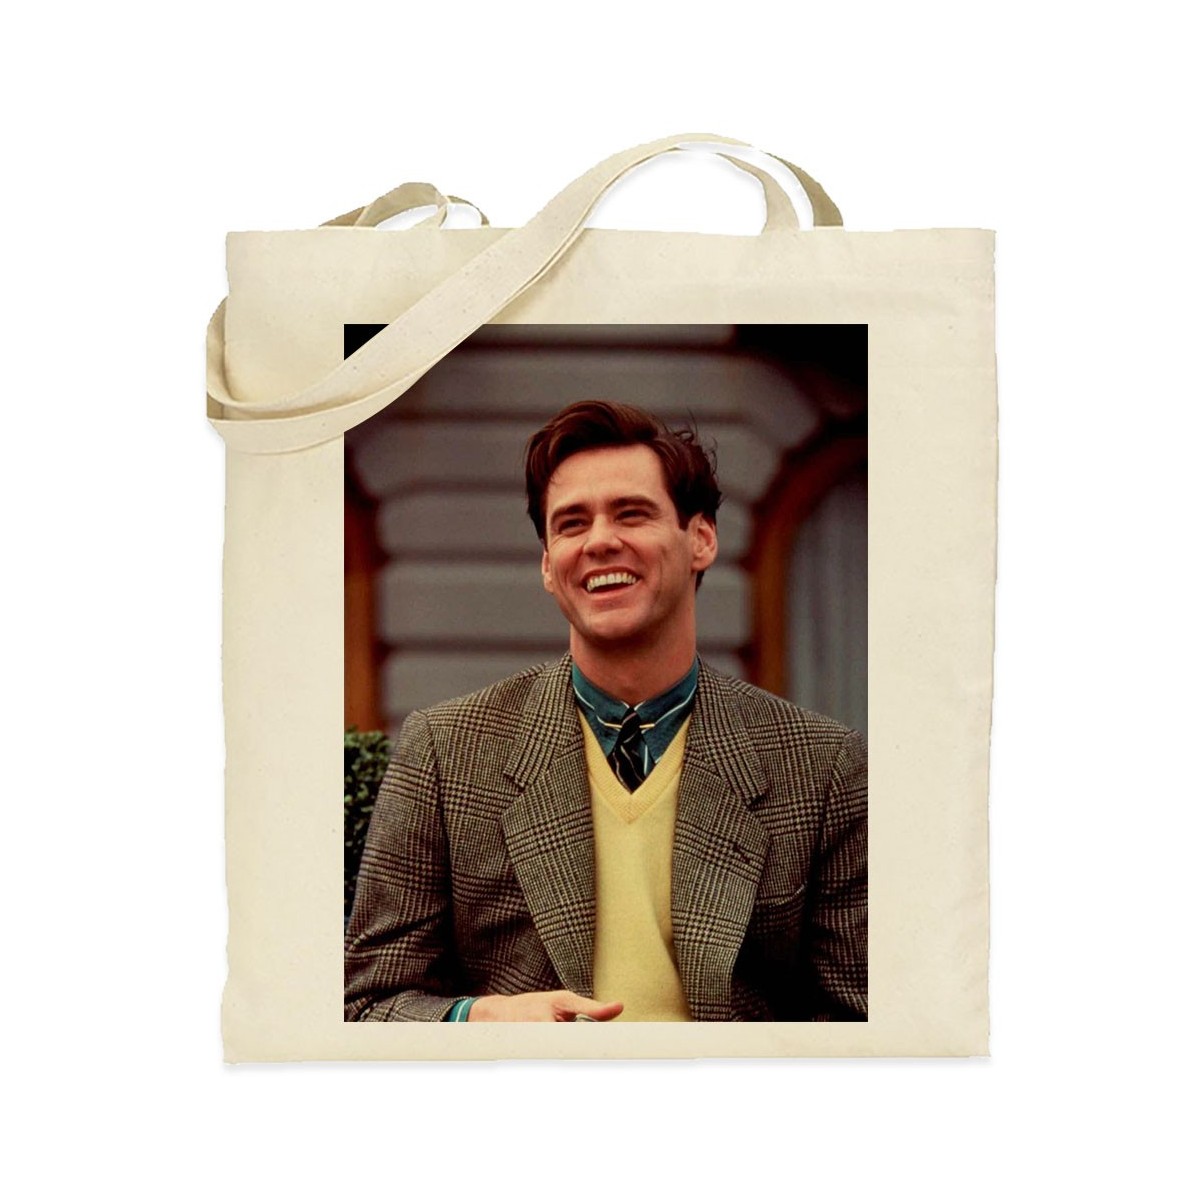 Tote bag The Truman Show